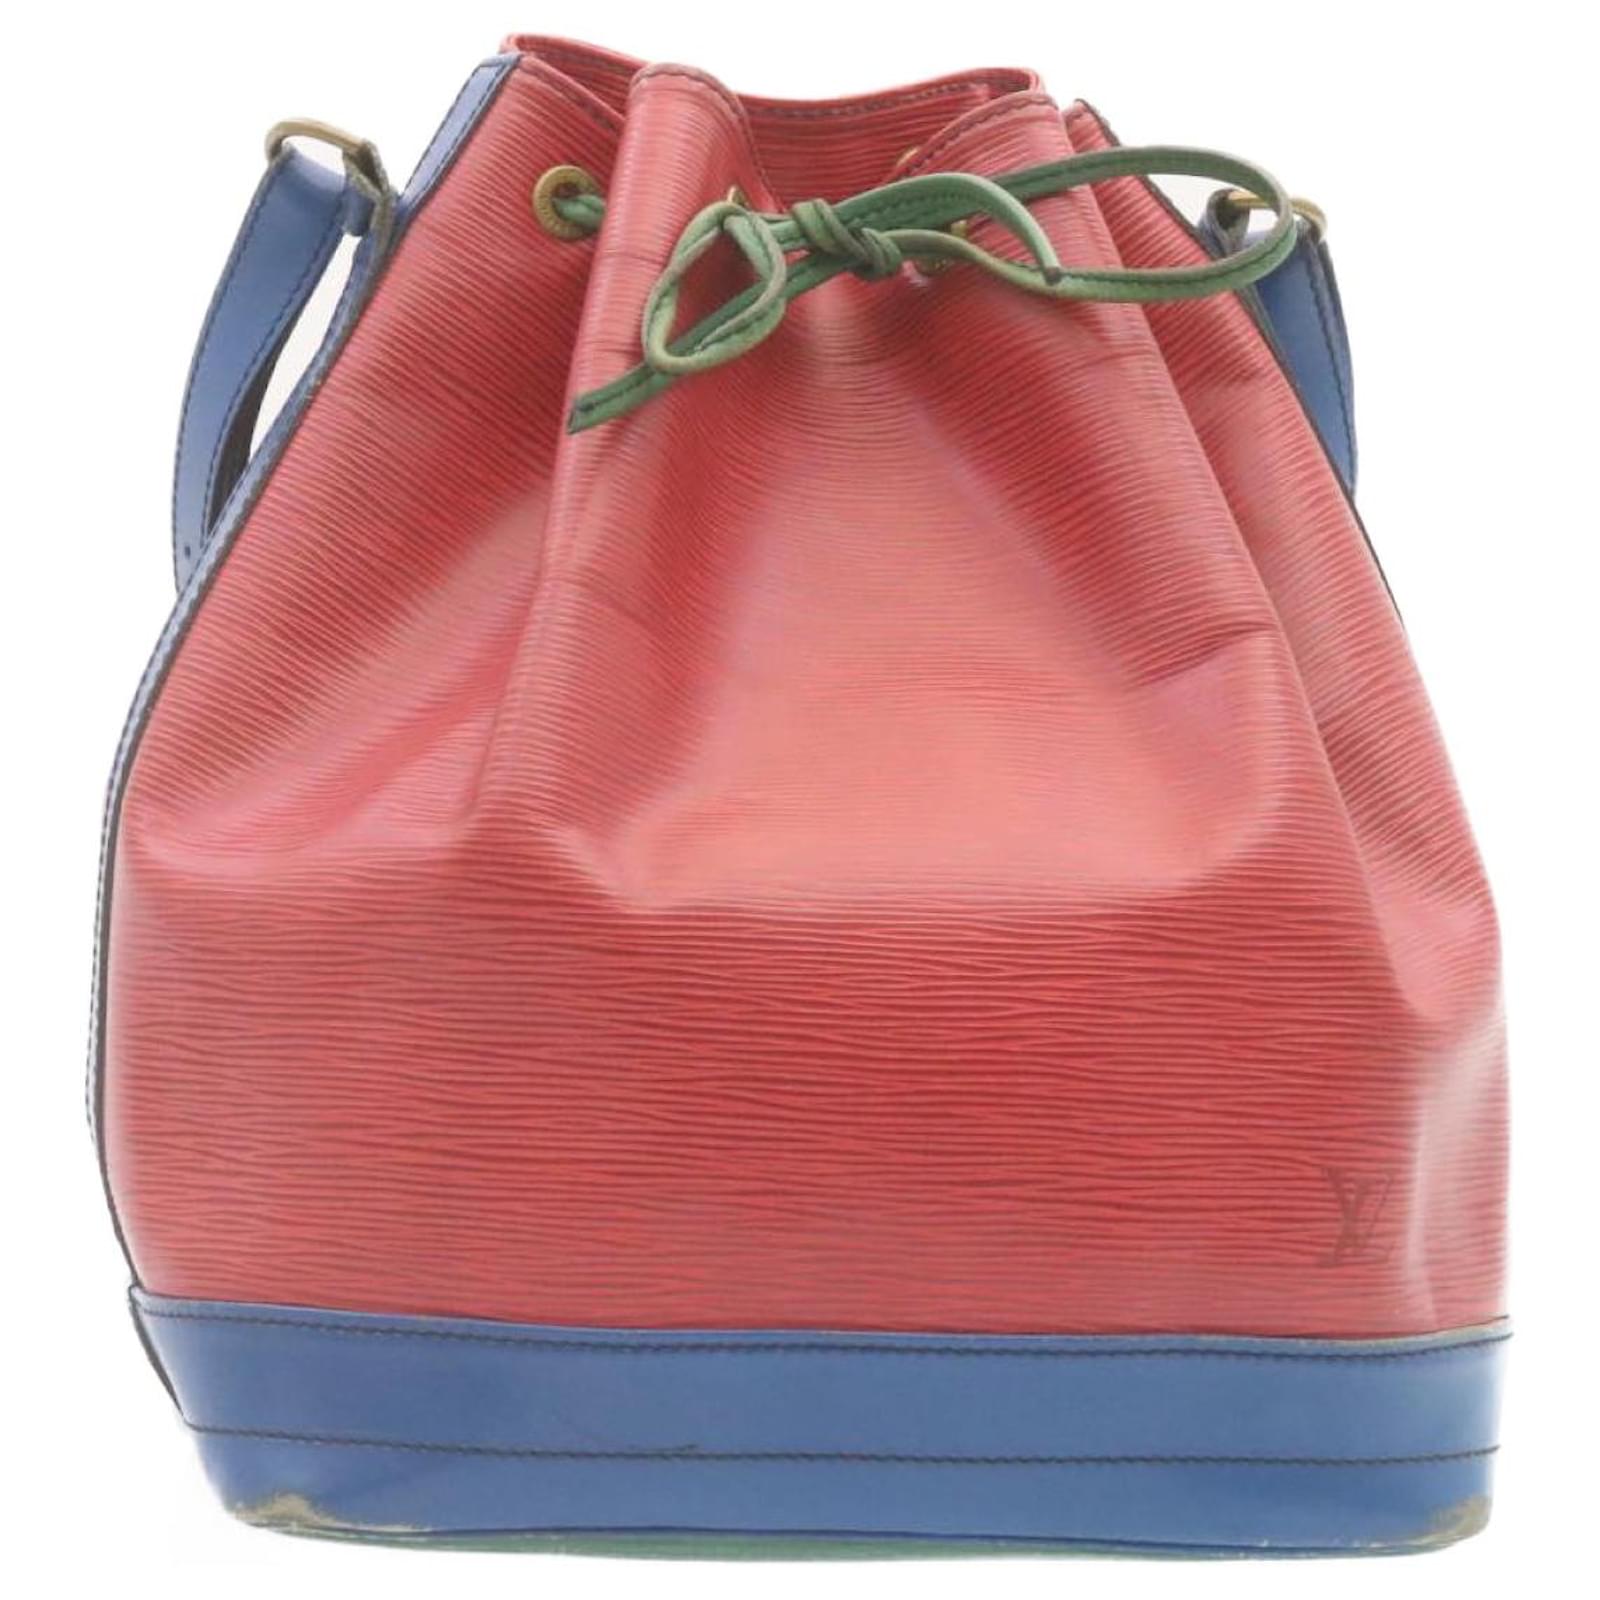 LOUIS VUITTON Epi Neo Noe MM Silver Buckle Handle Shoulder Bag  Blue/Red/Green